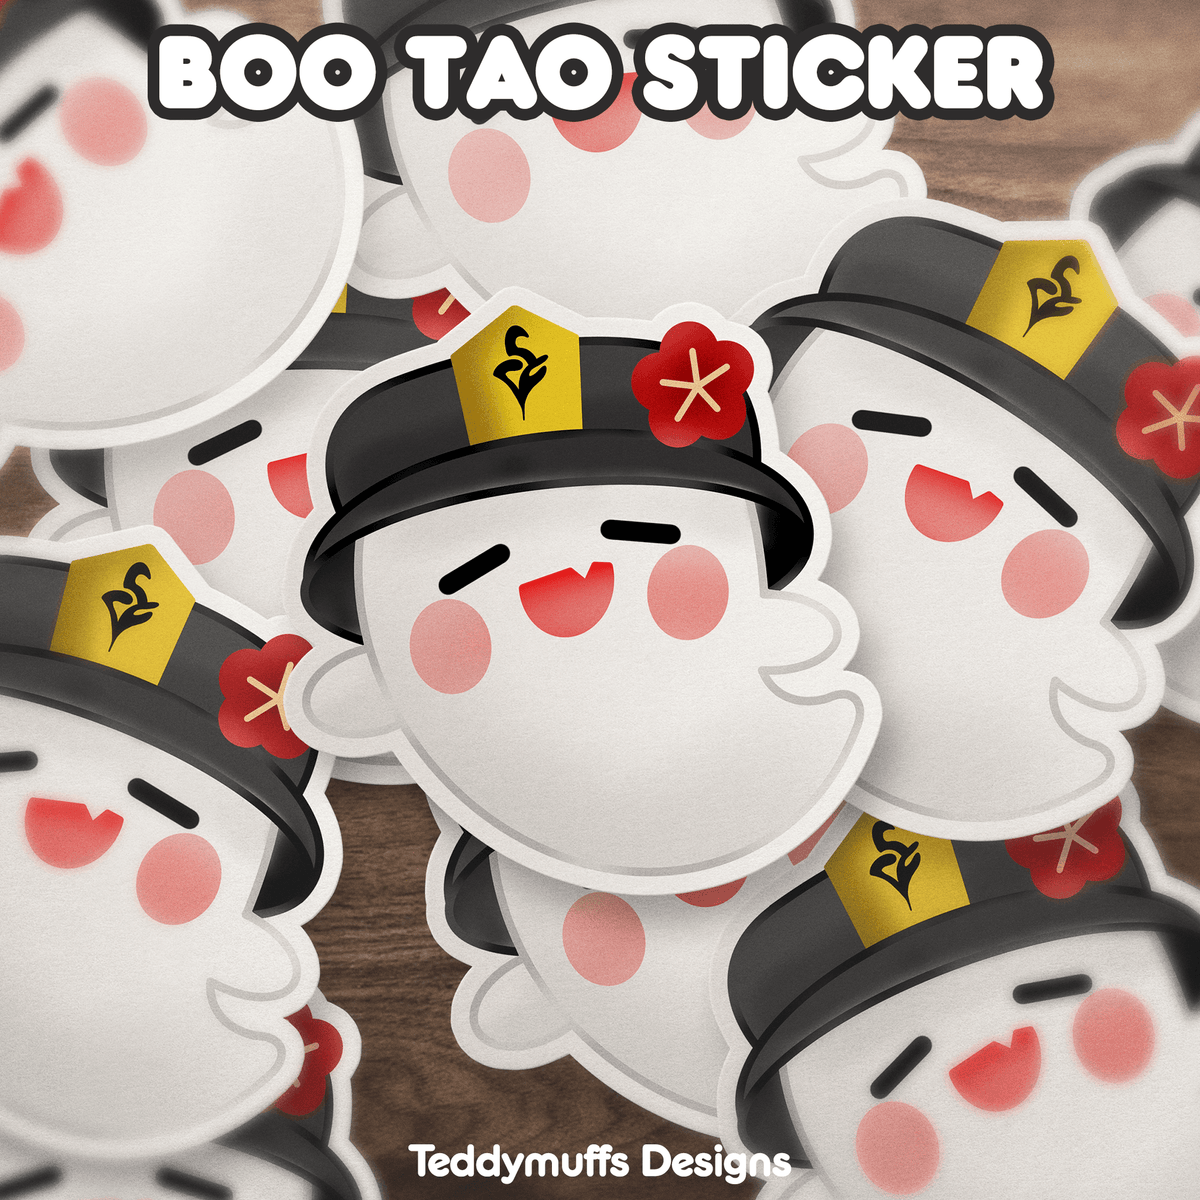 Boo Tao Sticker - Teddymuffs Designs